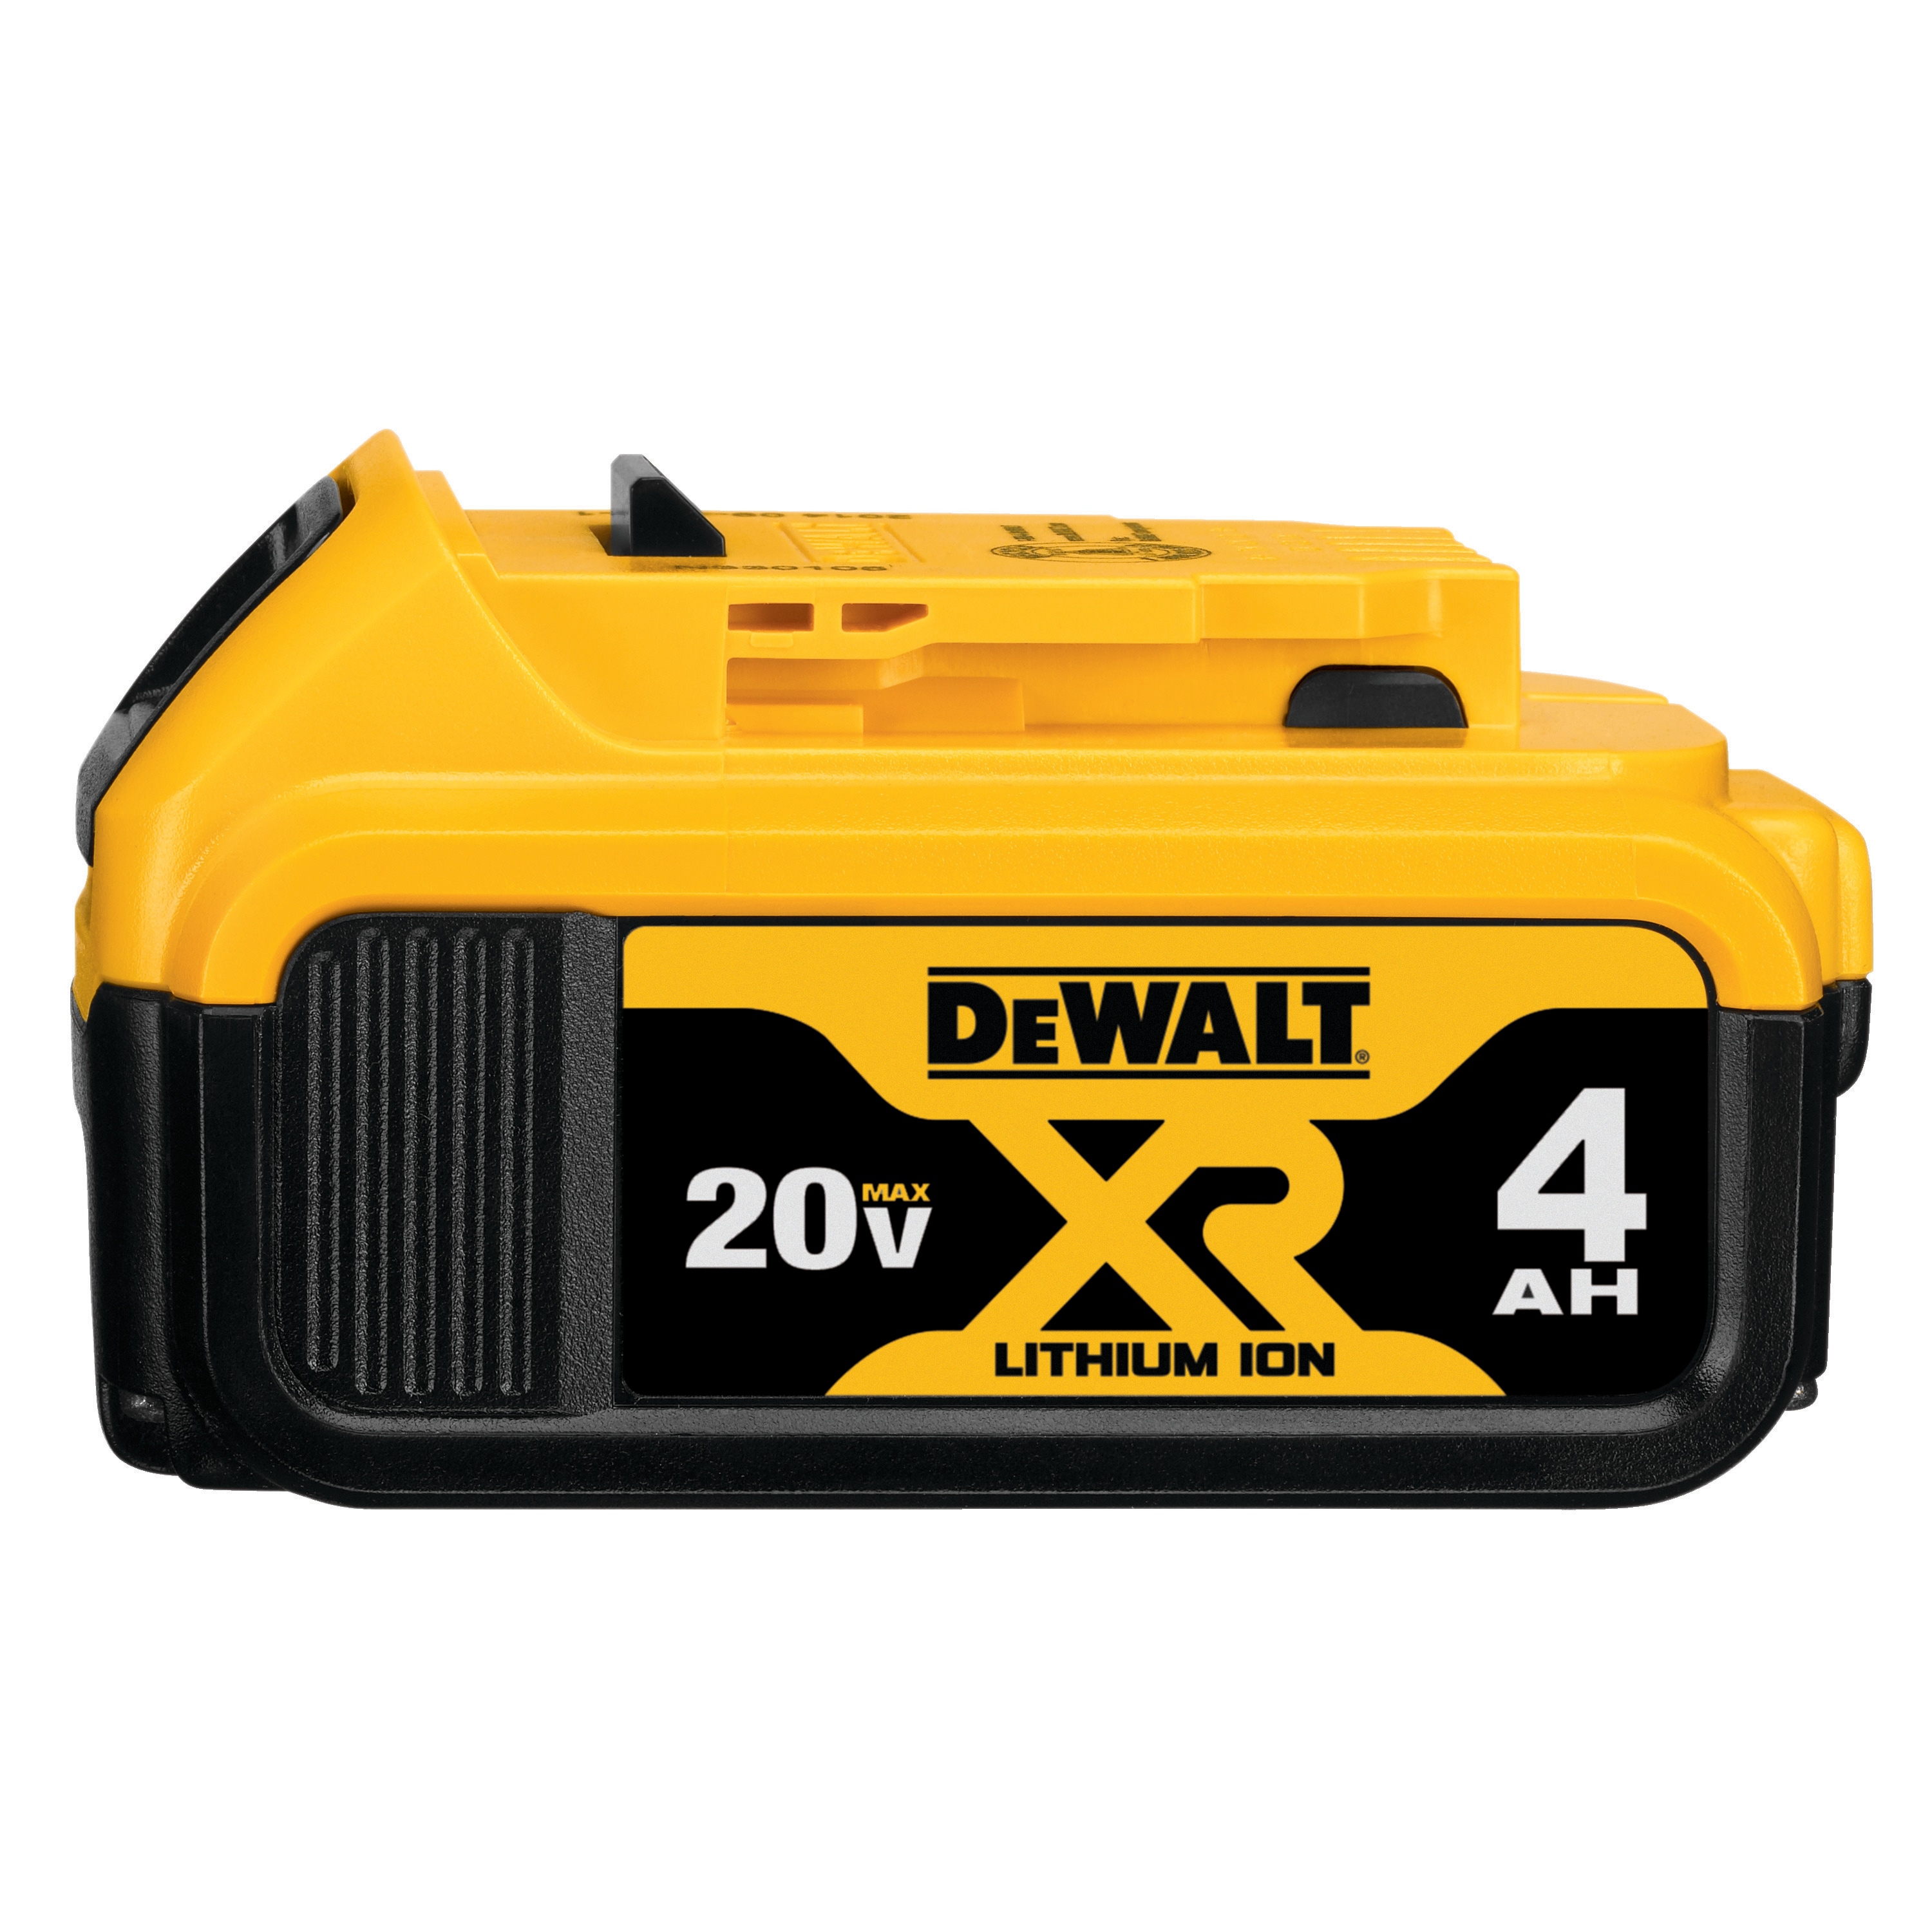 DEWALT Powerstack 20V MAX Battery Starter Kit, Rechargeable, 5Ah, Lithium  Ion (DCBP520C)